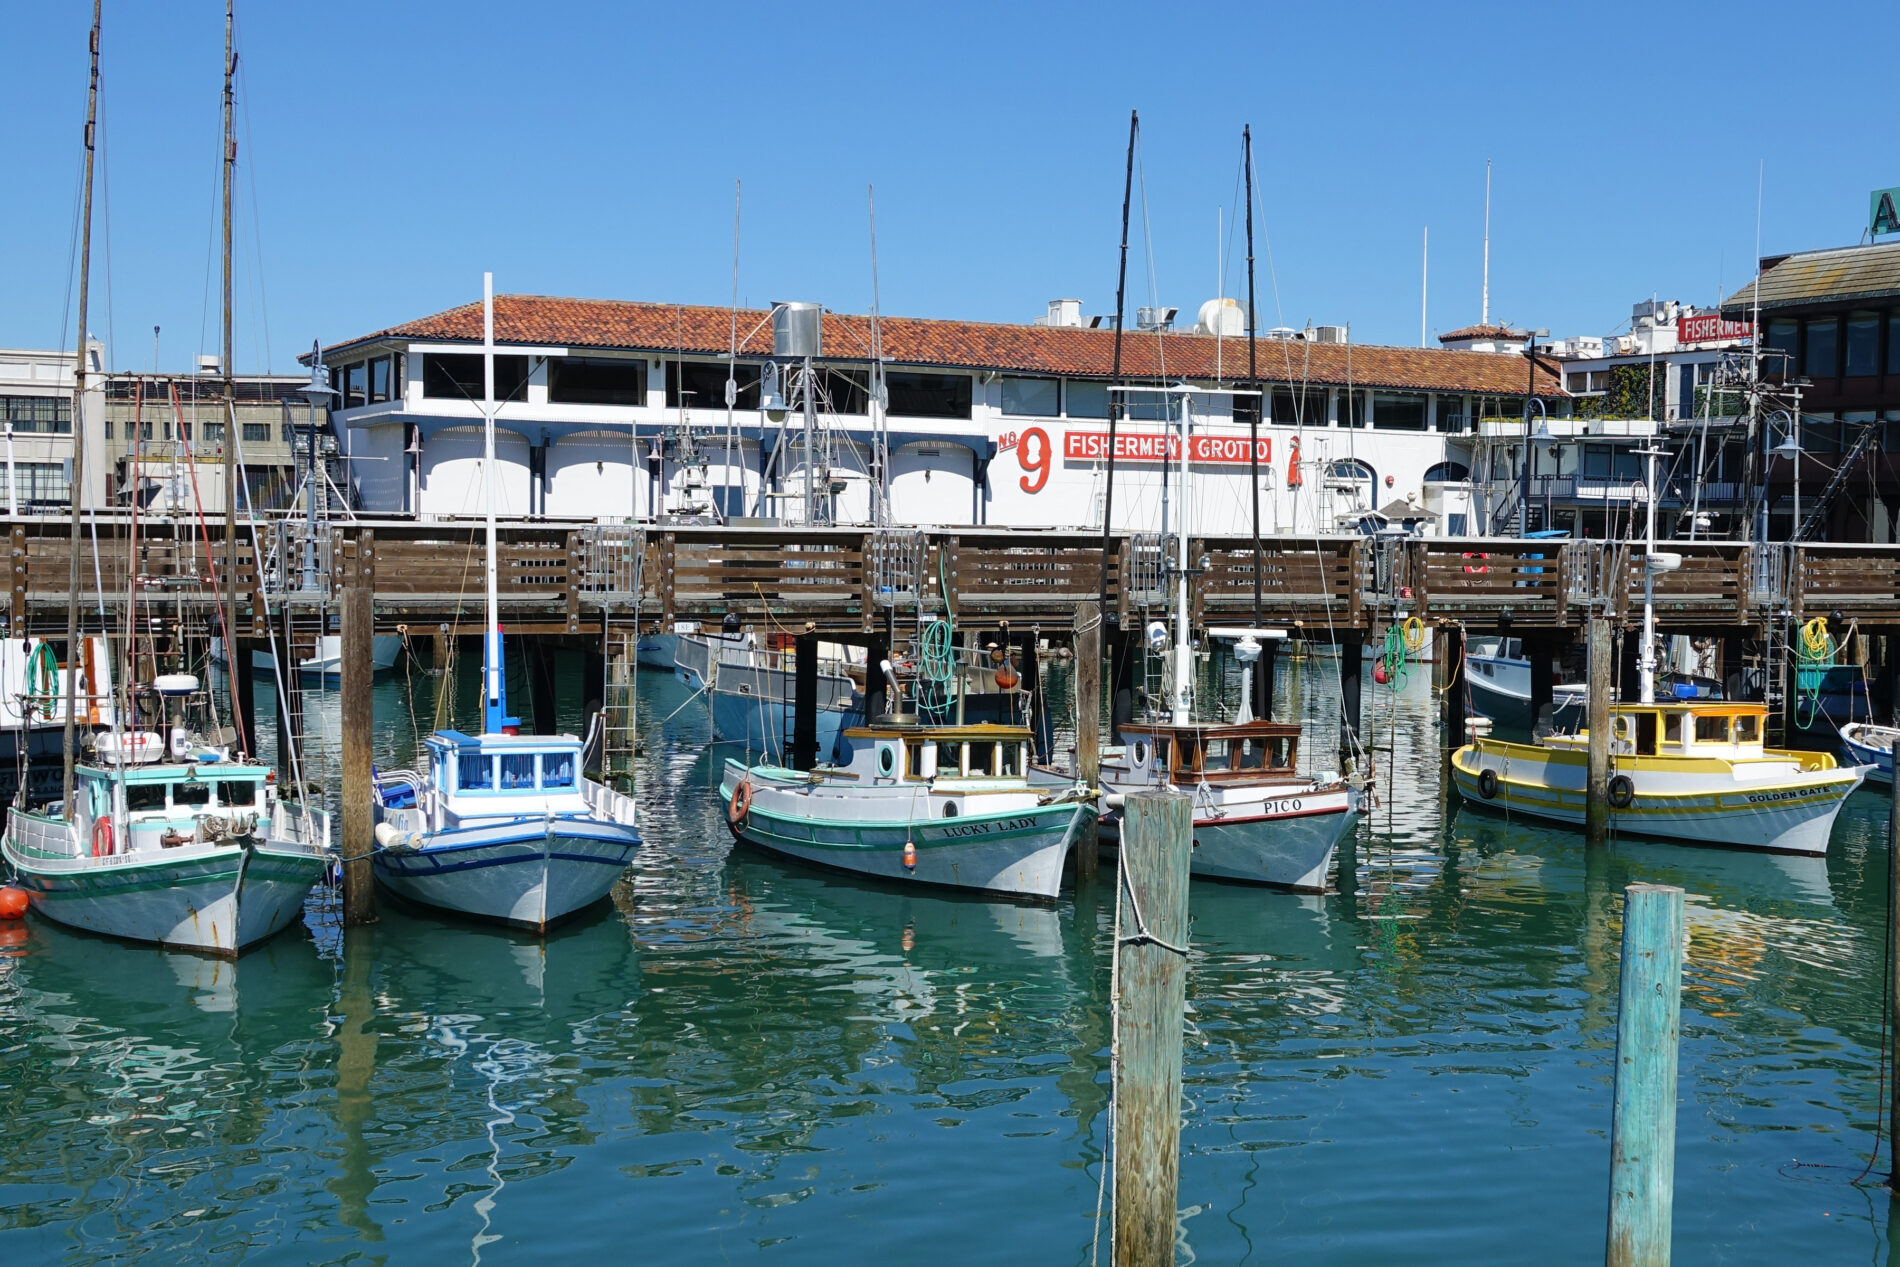 Colorful fishing boats docked at Fisherman’s Wharf in San Francisco.